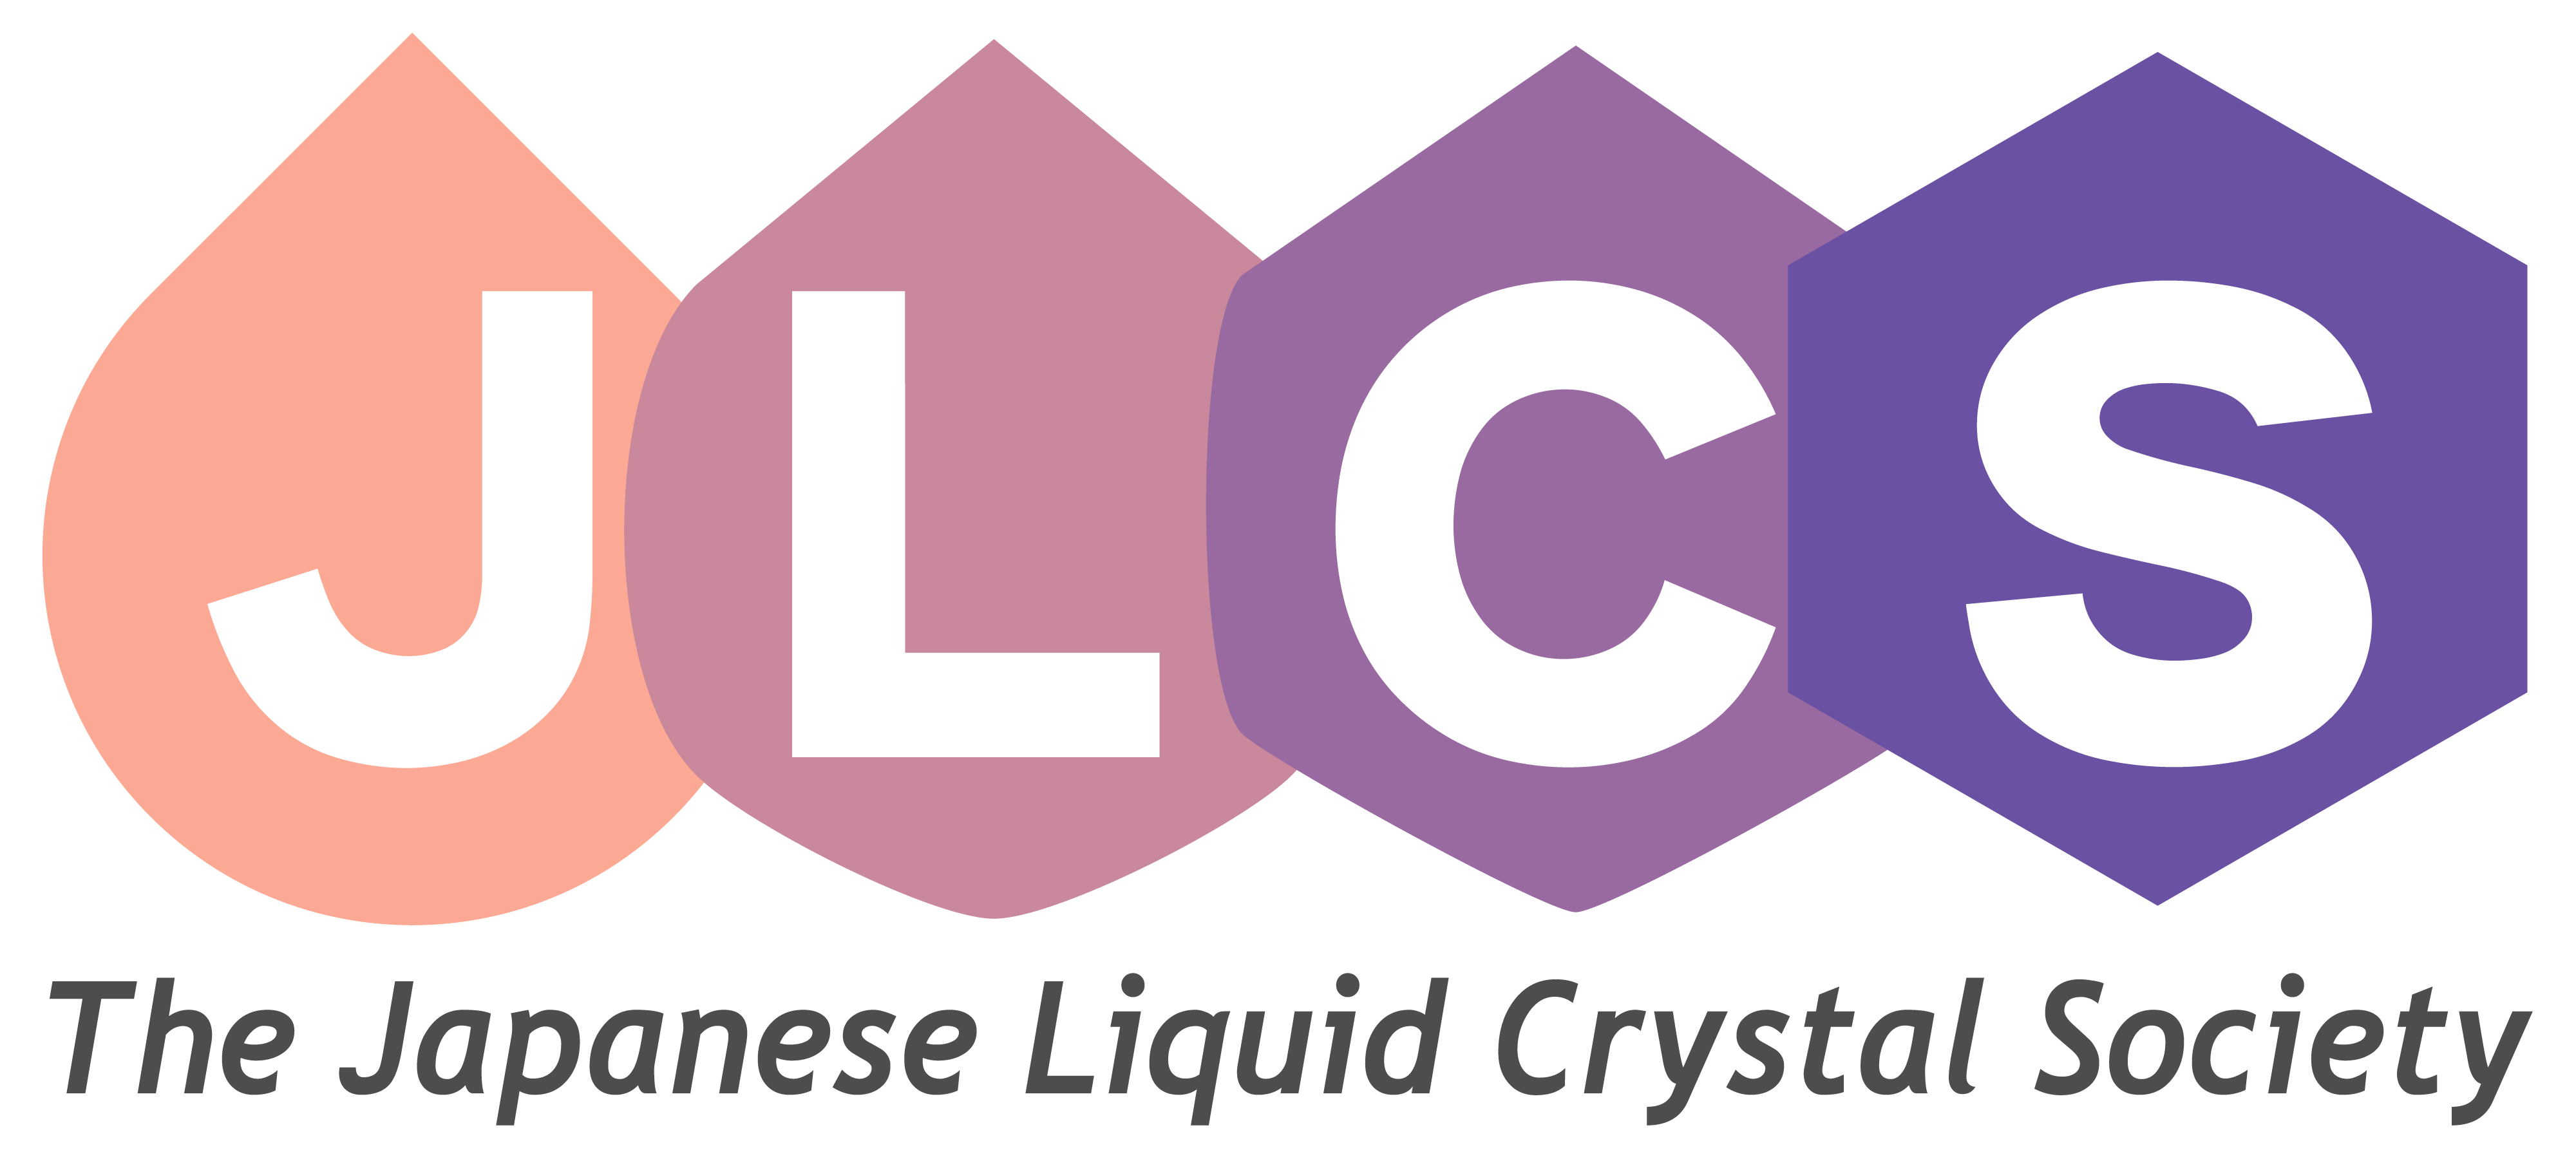 JLCS Logo